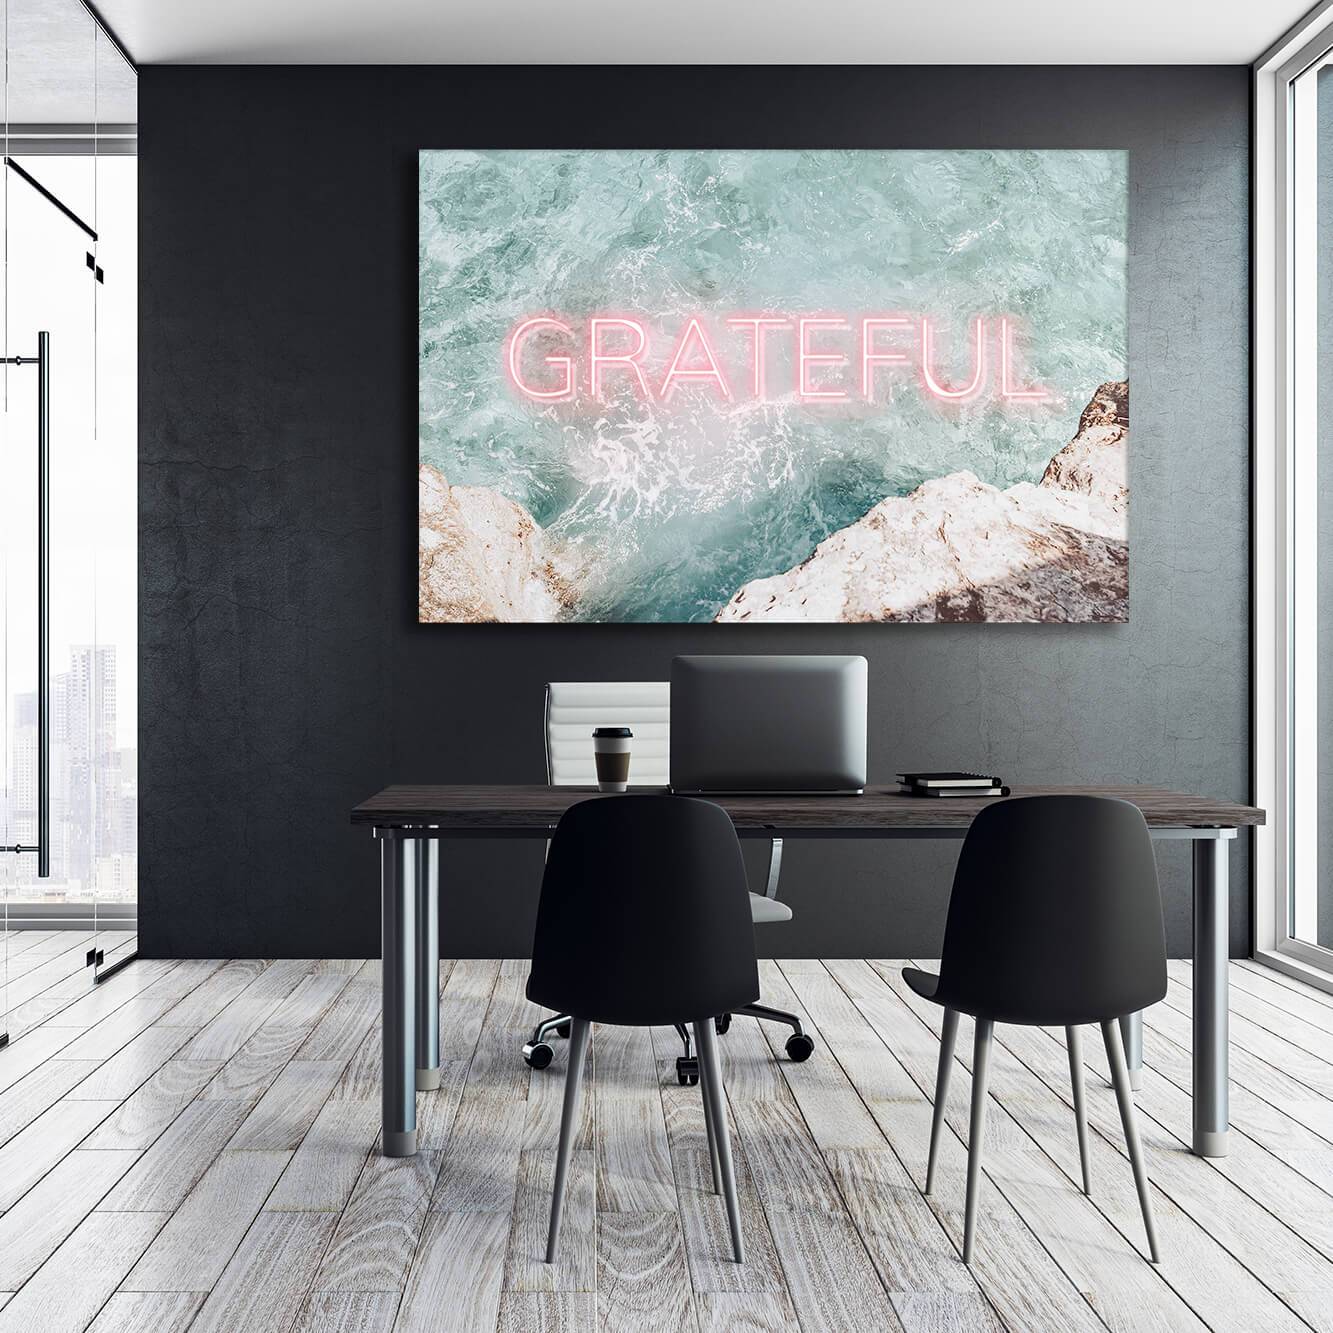 Neon Water - GRATEFUL Wall Art | Inspirational Wall Art Motivational Wall Art Quotes Office Art | ImpaktMaker Exclusive Canvas Art Landscape